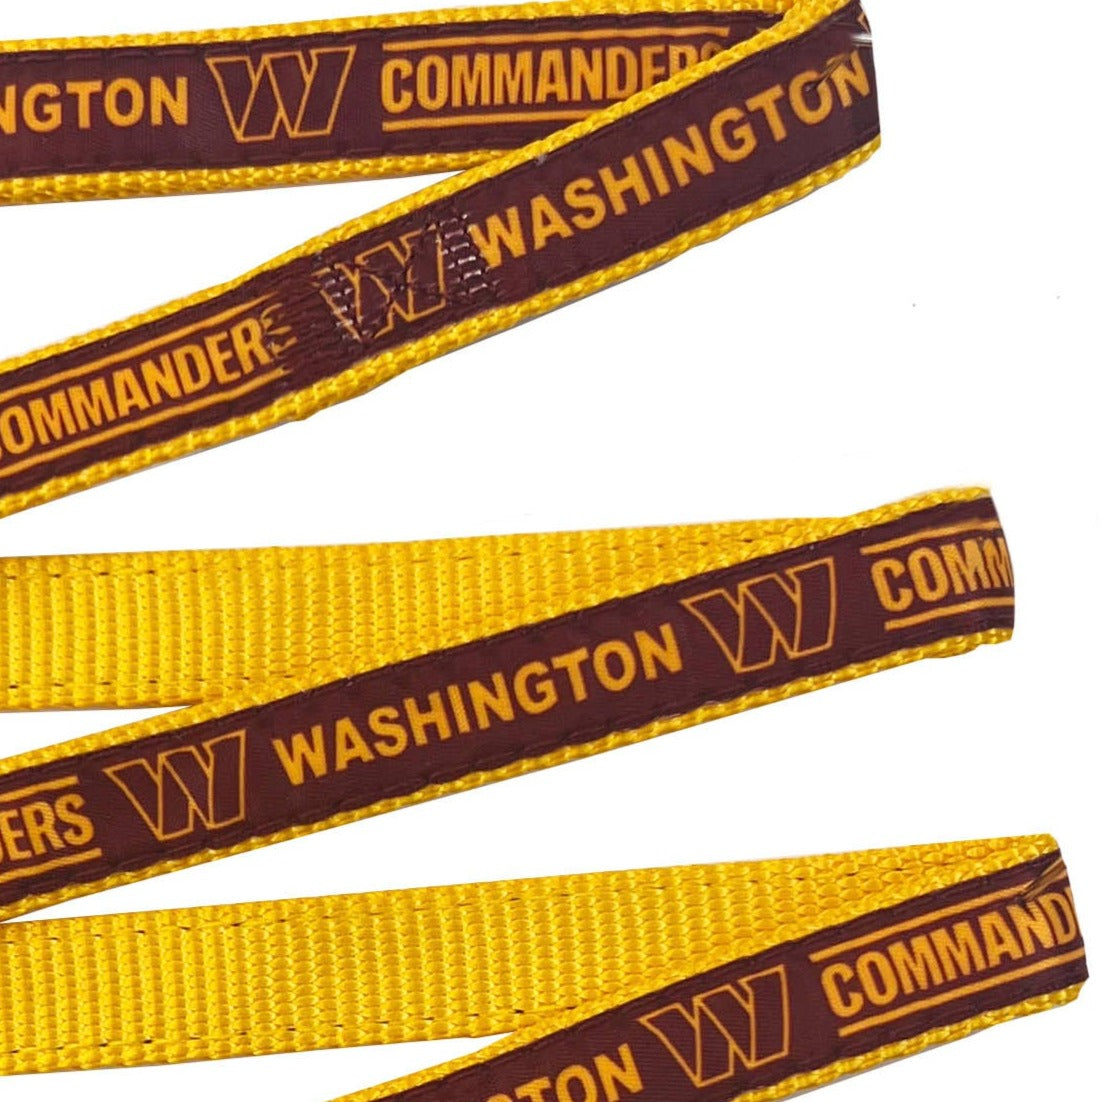 Washington Commanders Dog Collar or Leash - 3 Red Rovers